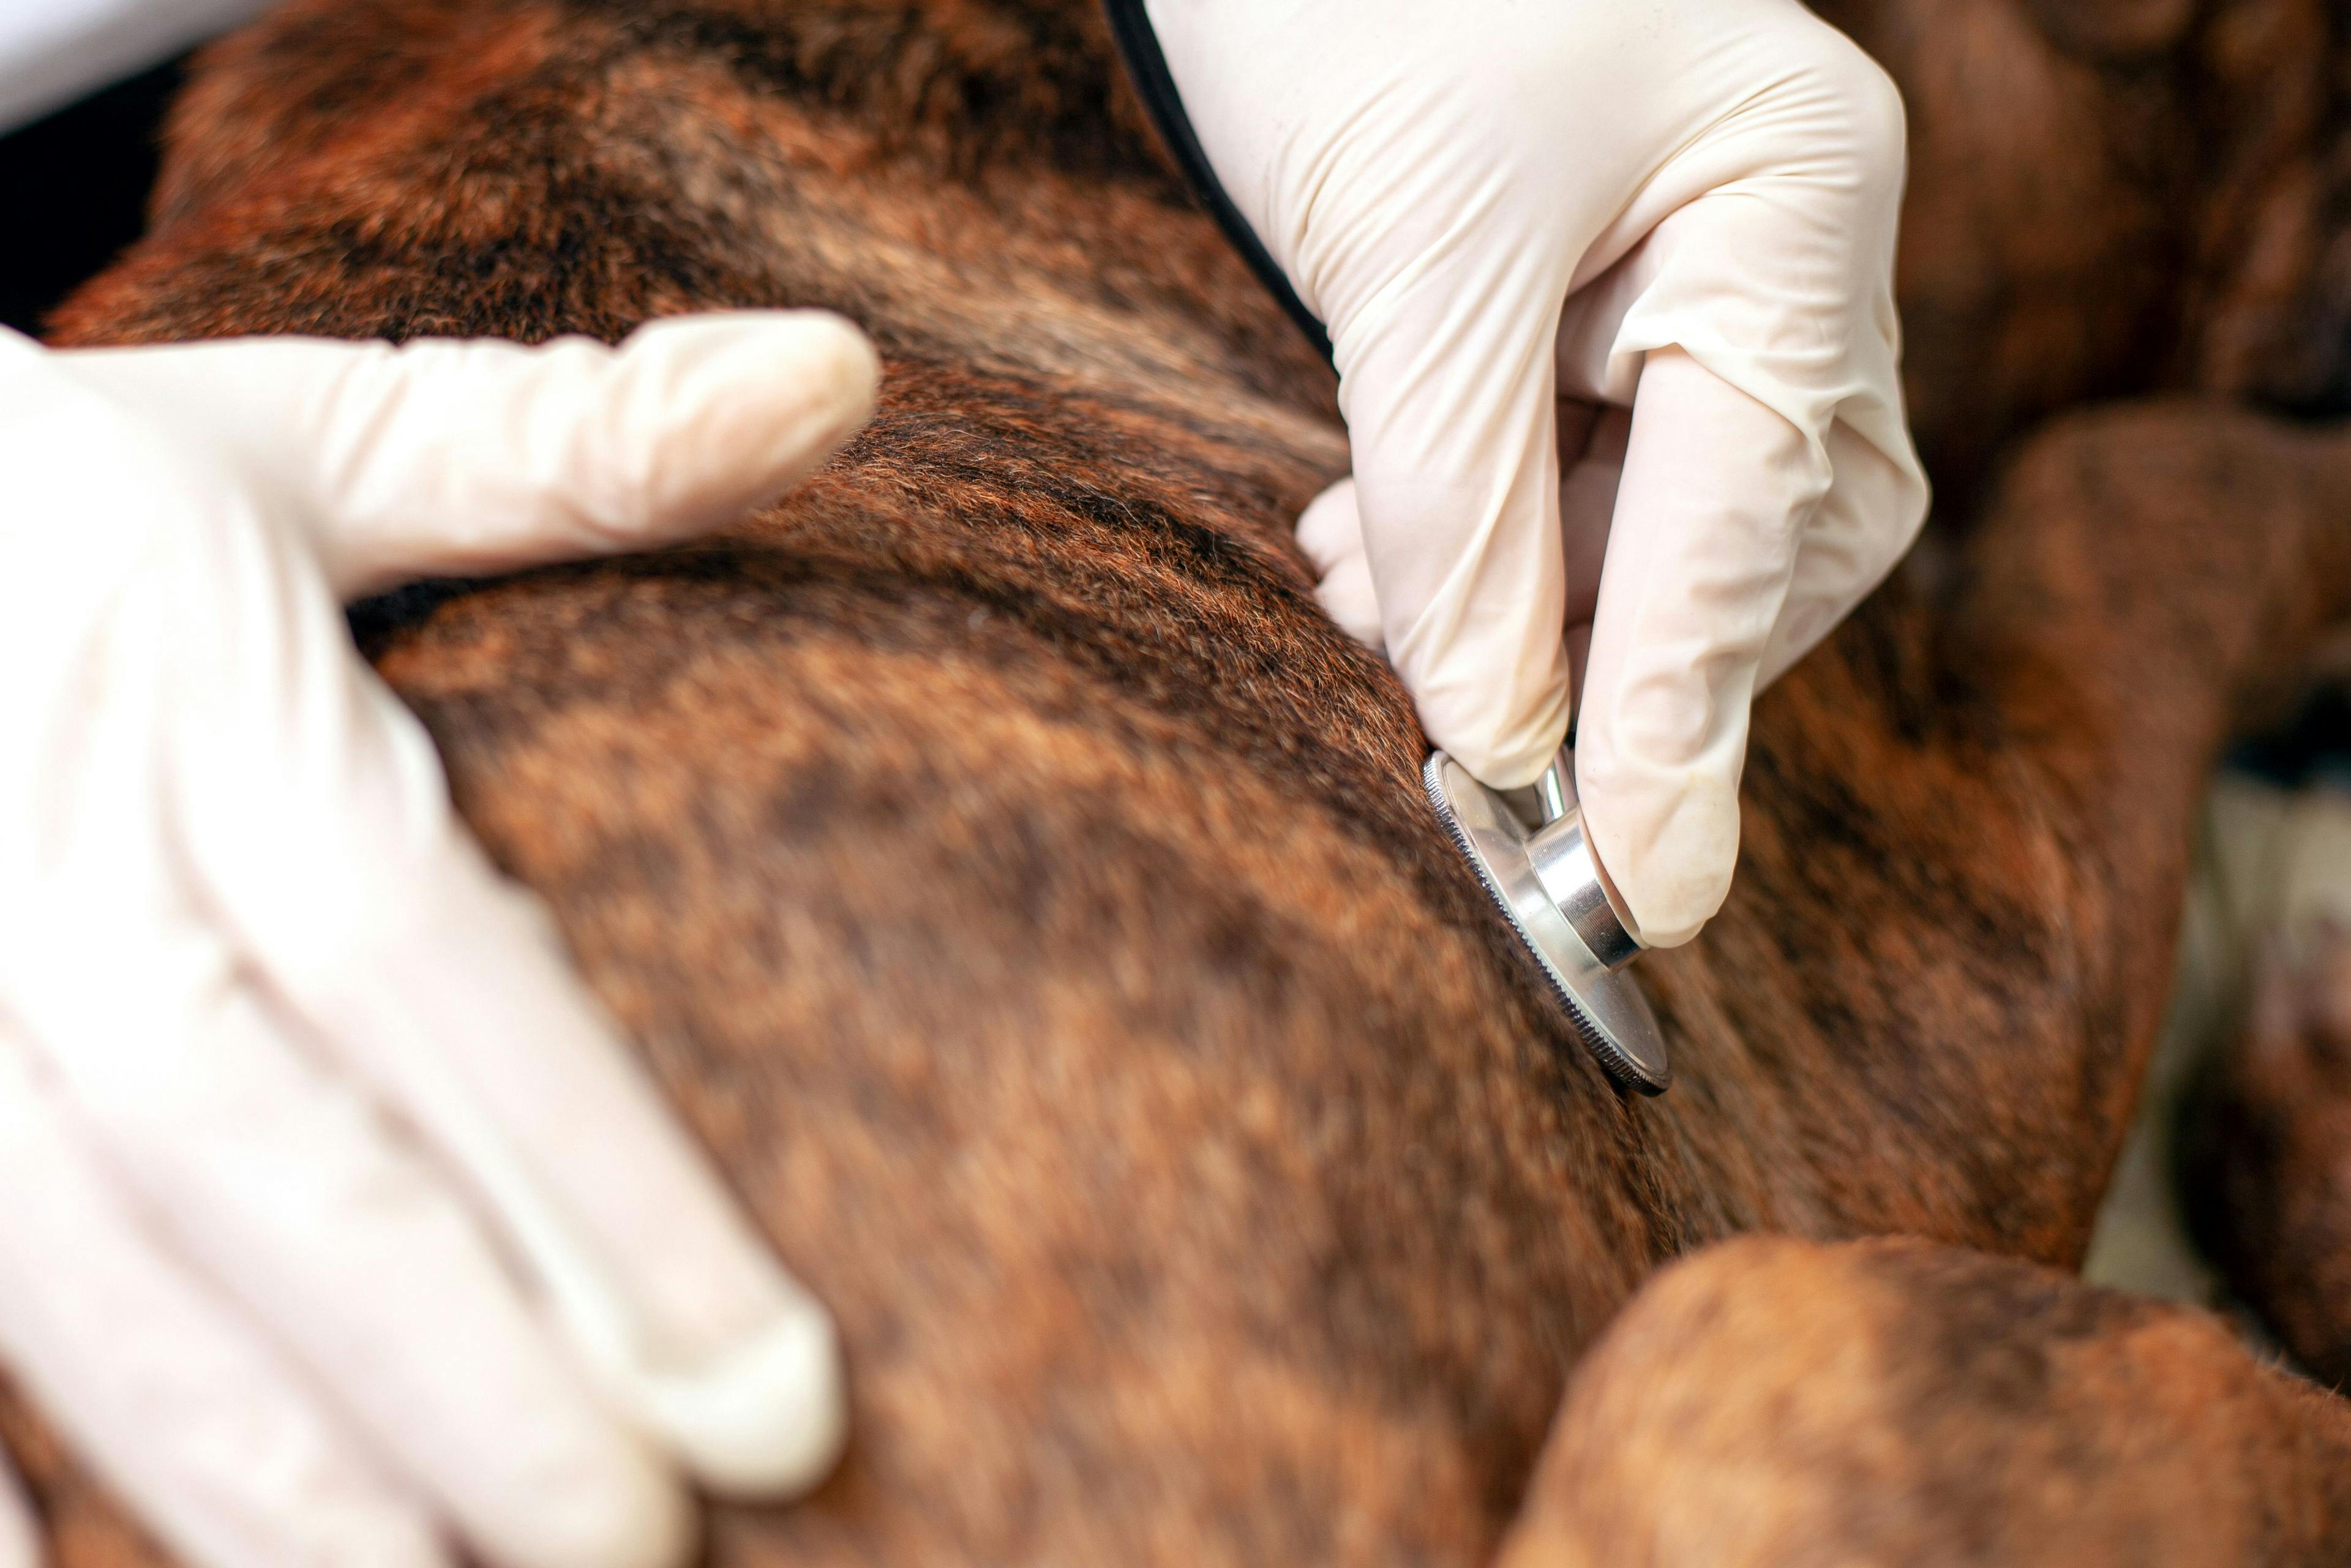 Photo: Fukume/Adobe Stock

A veterinarian listens to a dog's heartbeat.